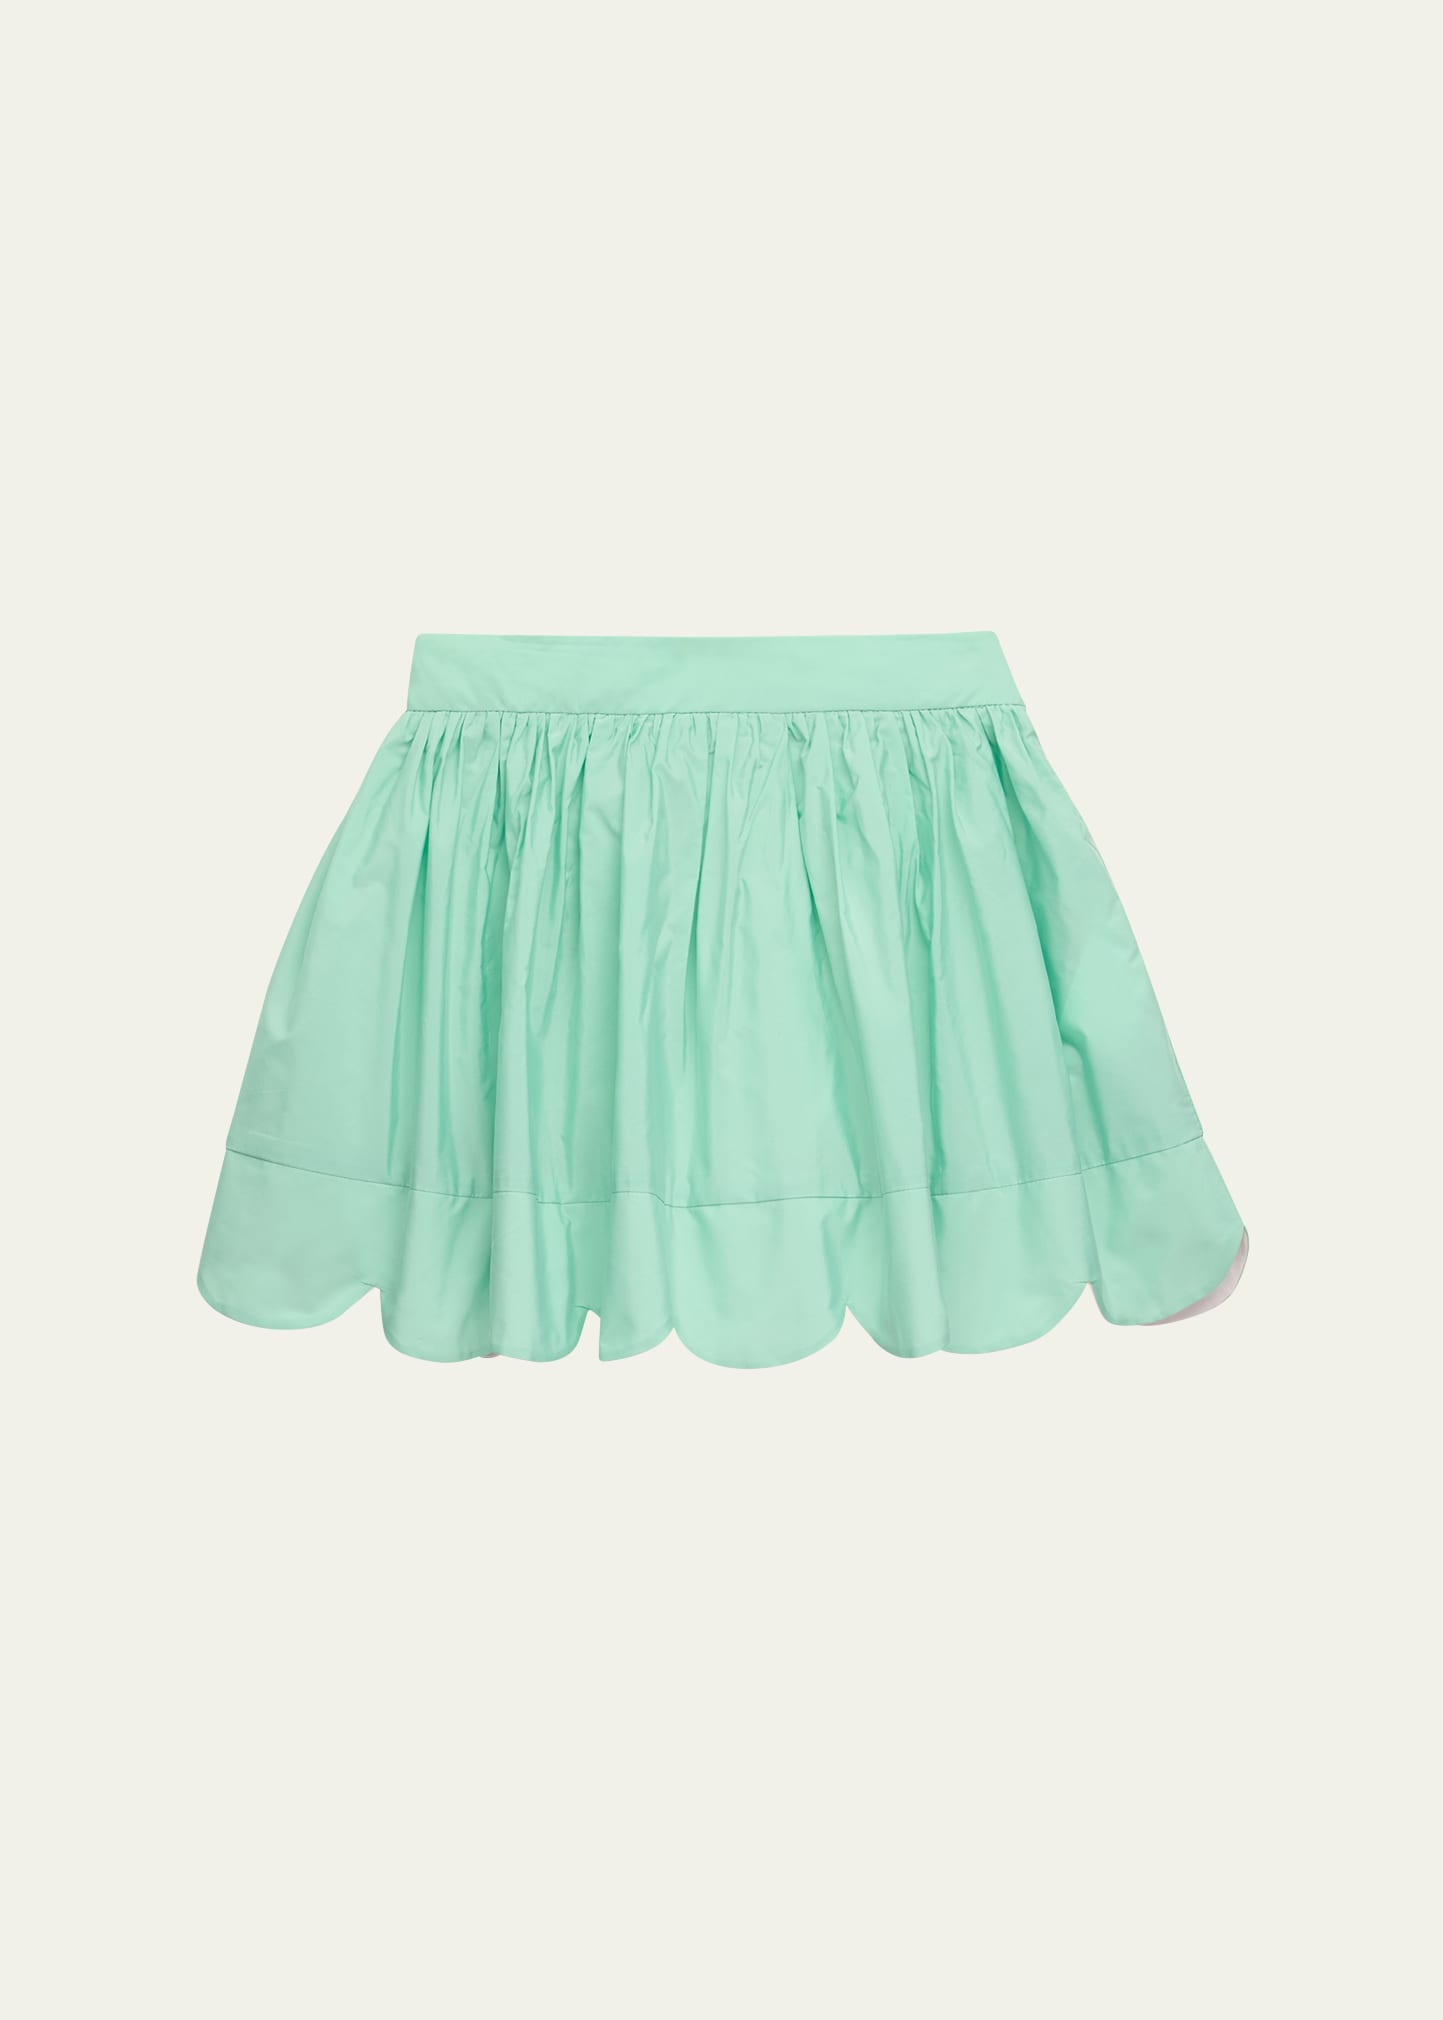 Girl's Taffeta Skirt with Scalloped Trim, Size 2-14